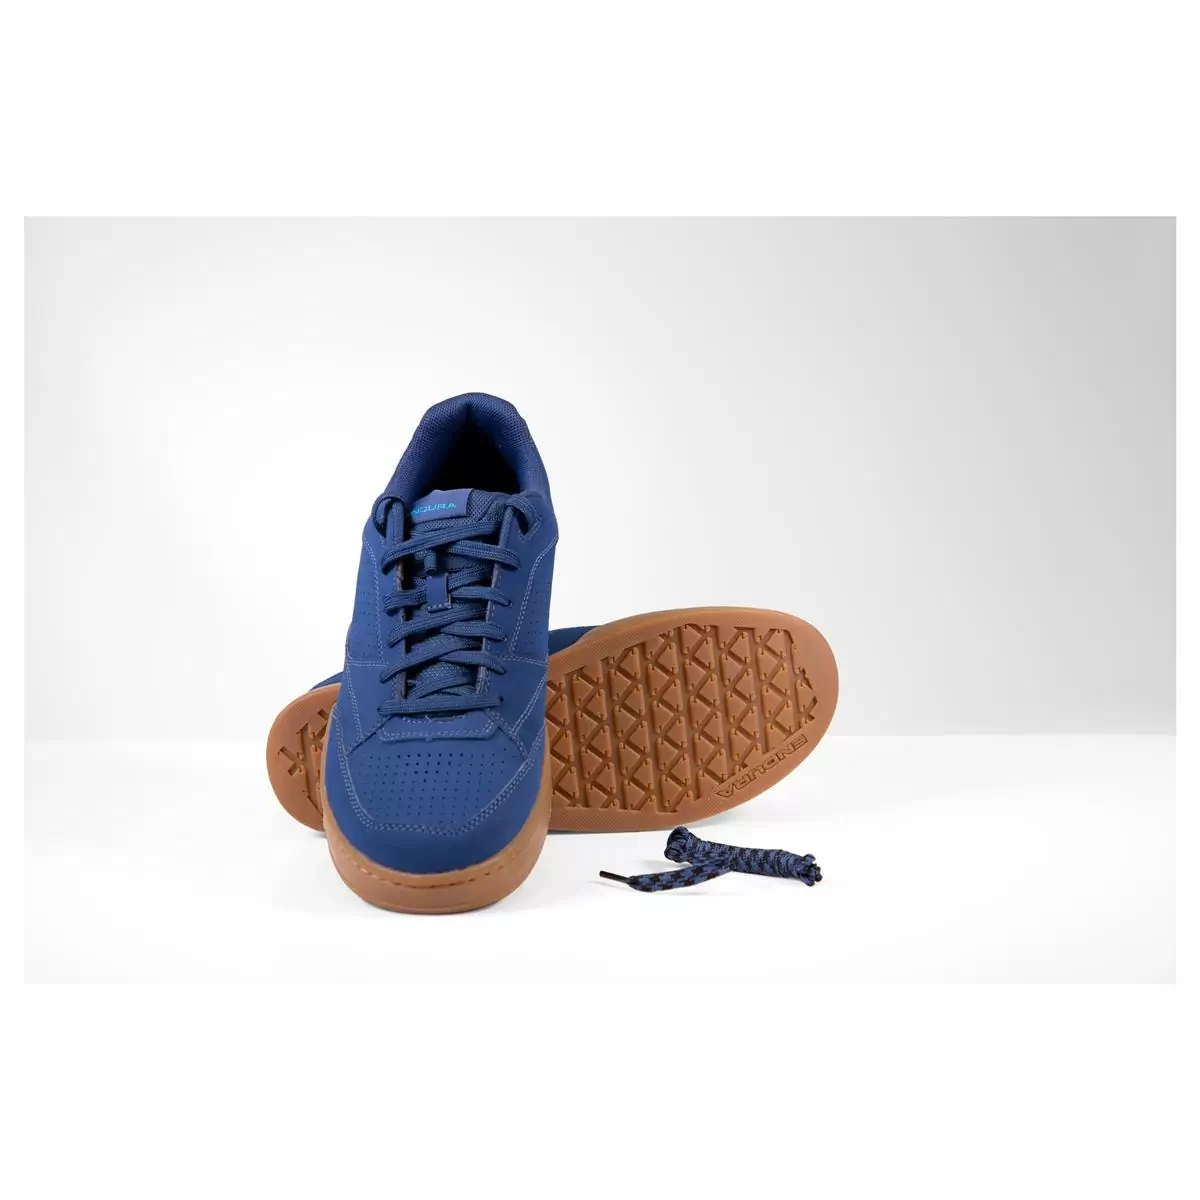 Hummvee Flat Pedal Shoes Blue Size 44 #3